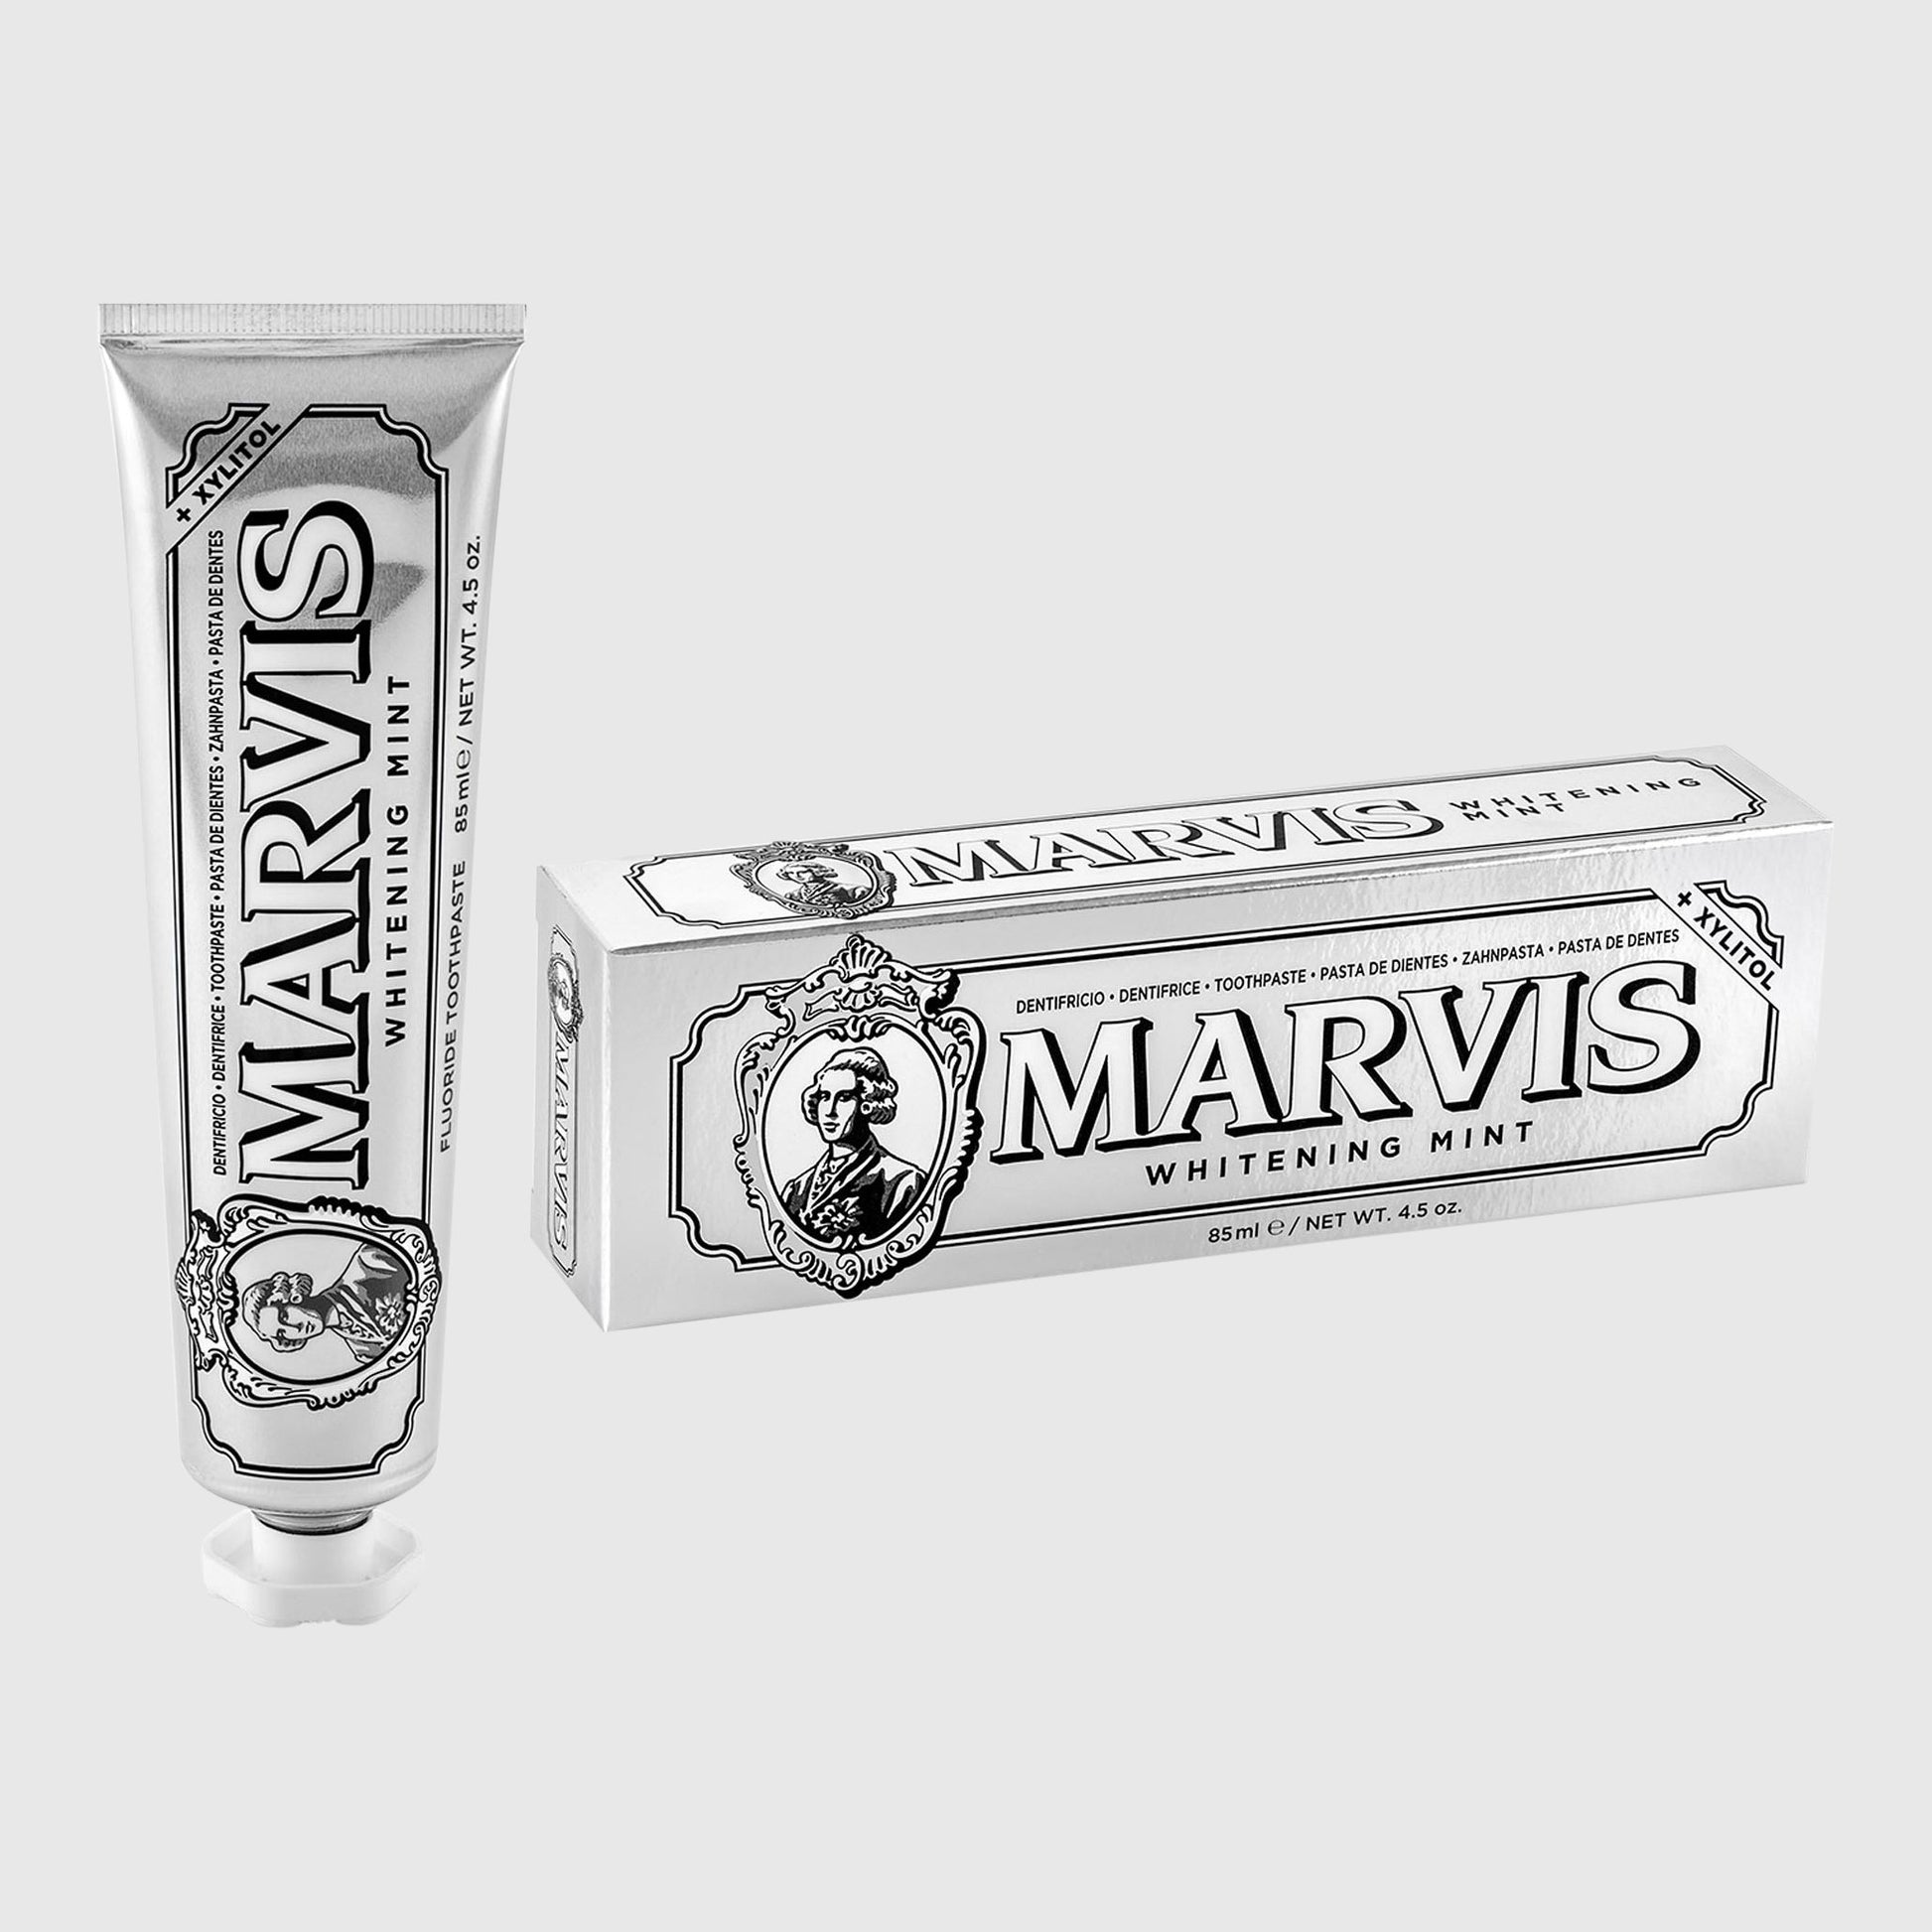 Marvis tannkrem - Whitening Mint Diverse Marvis 